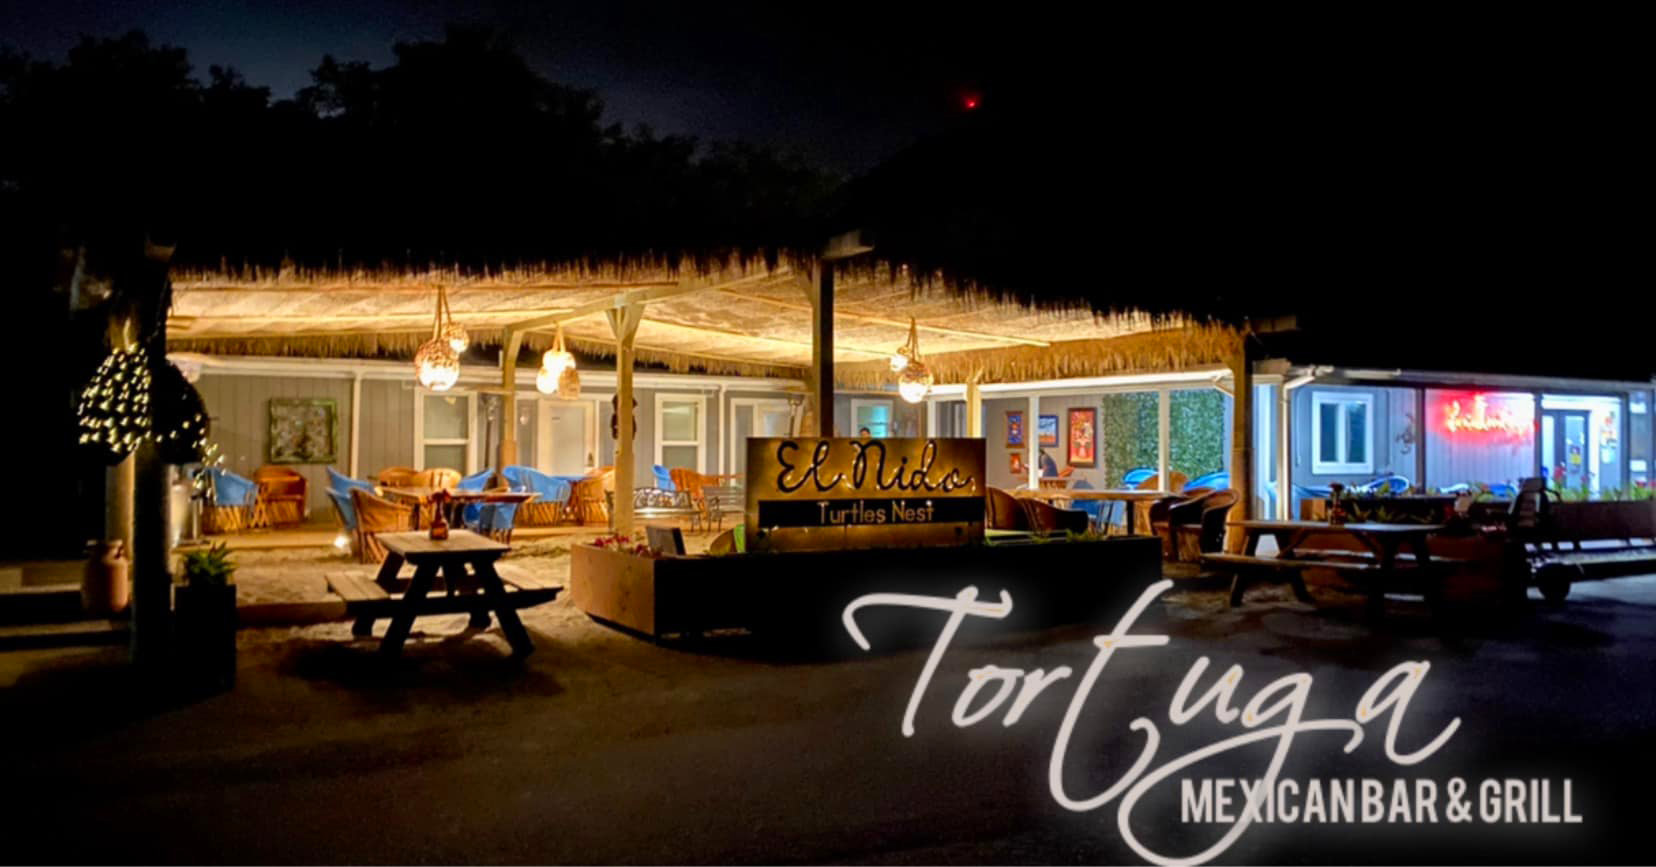 Tortuga-Mexican-Bar-and-Grill-Gold-Beach-Oregon.jpg